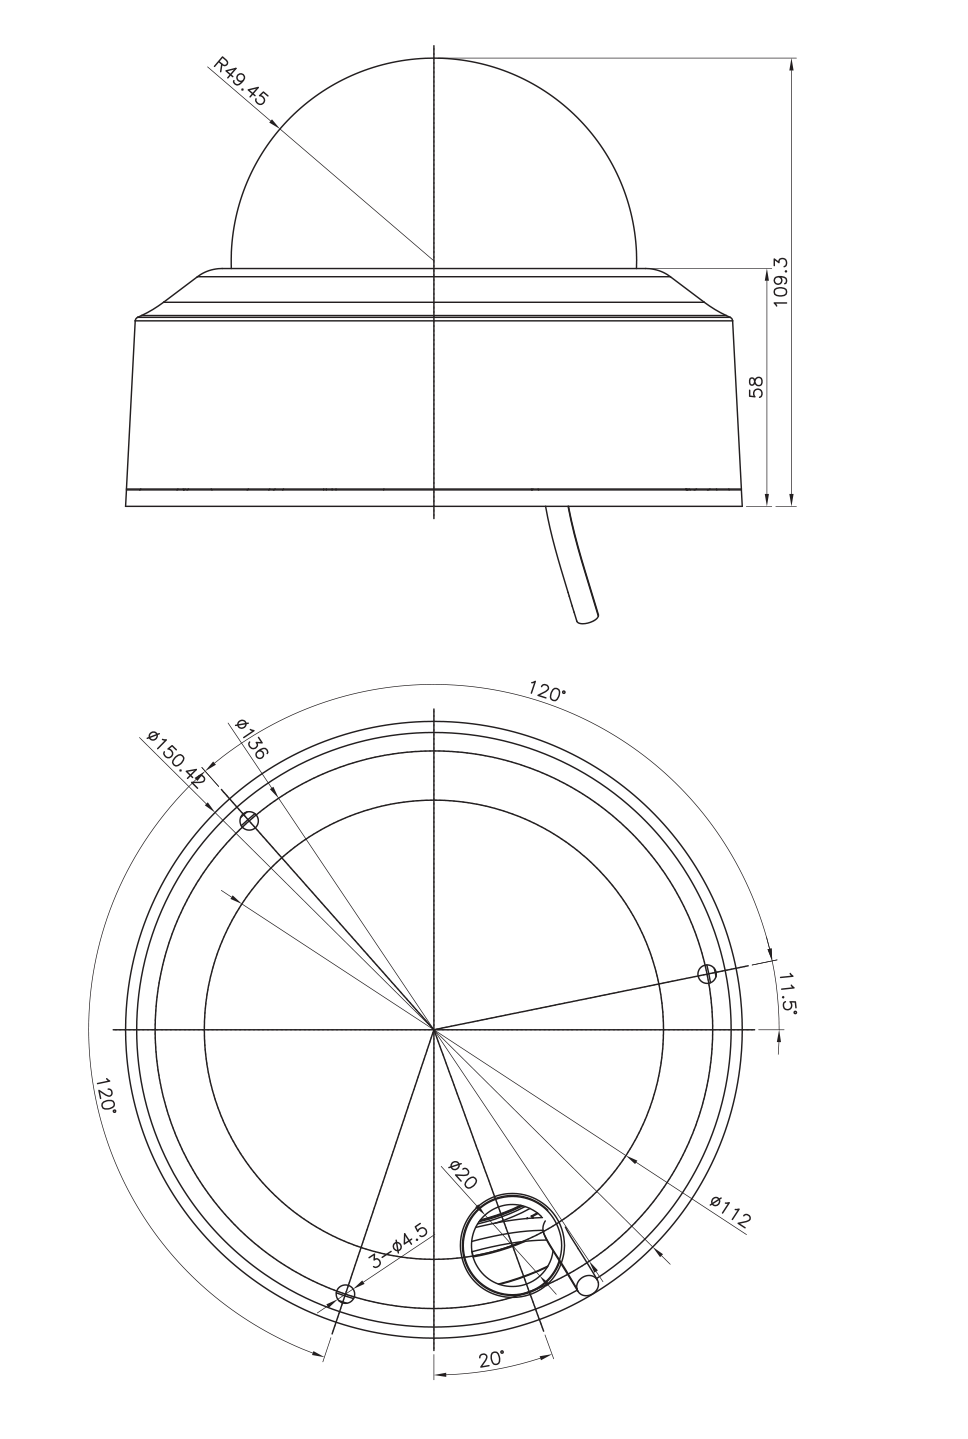 Internal dome dimensions